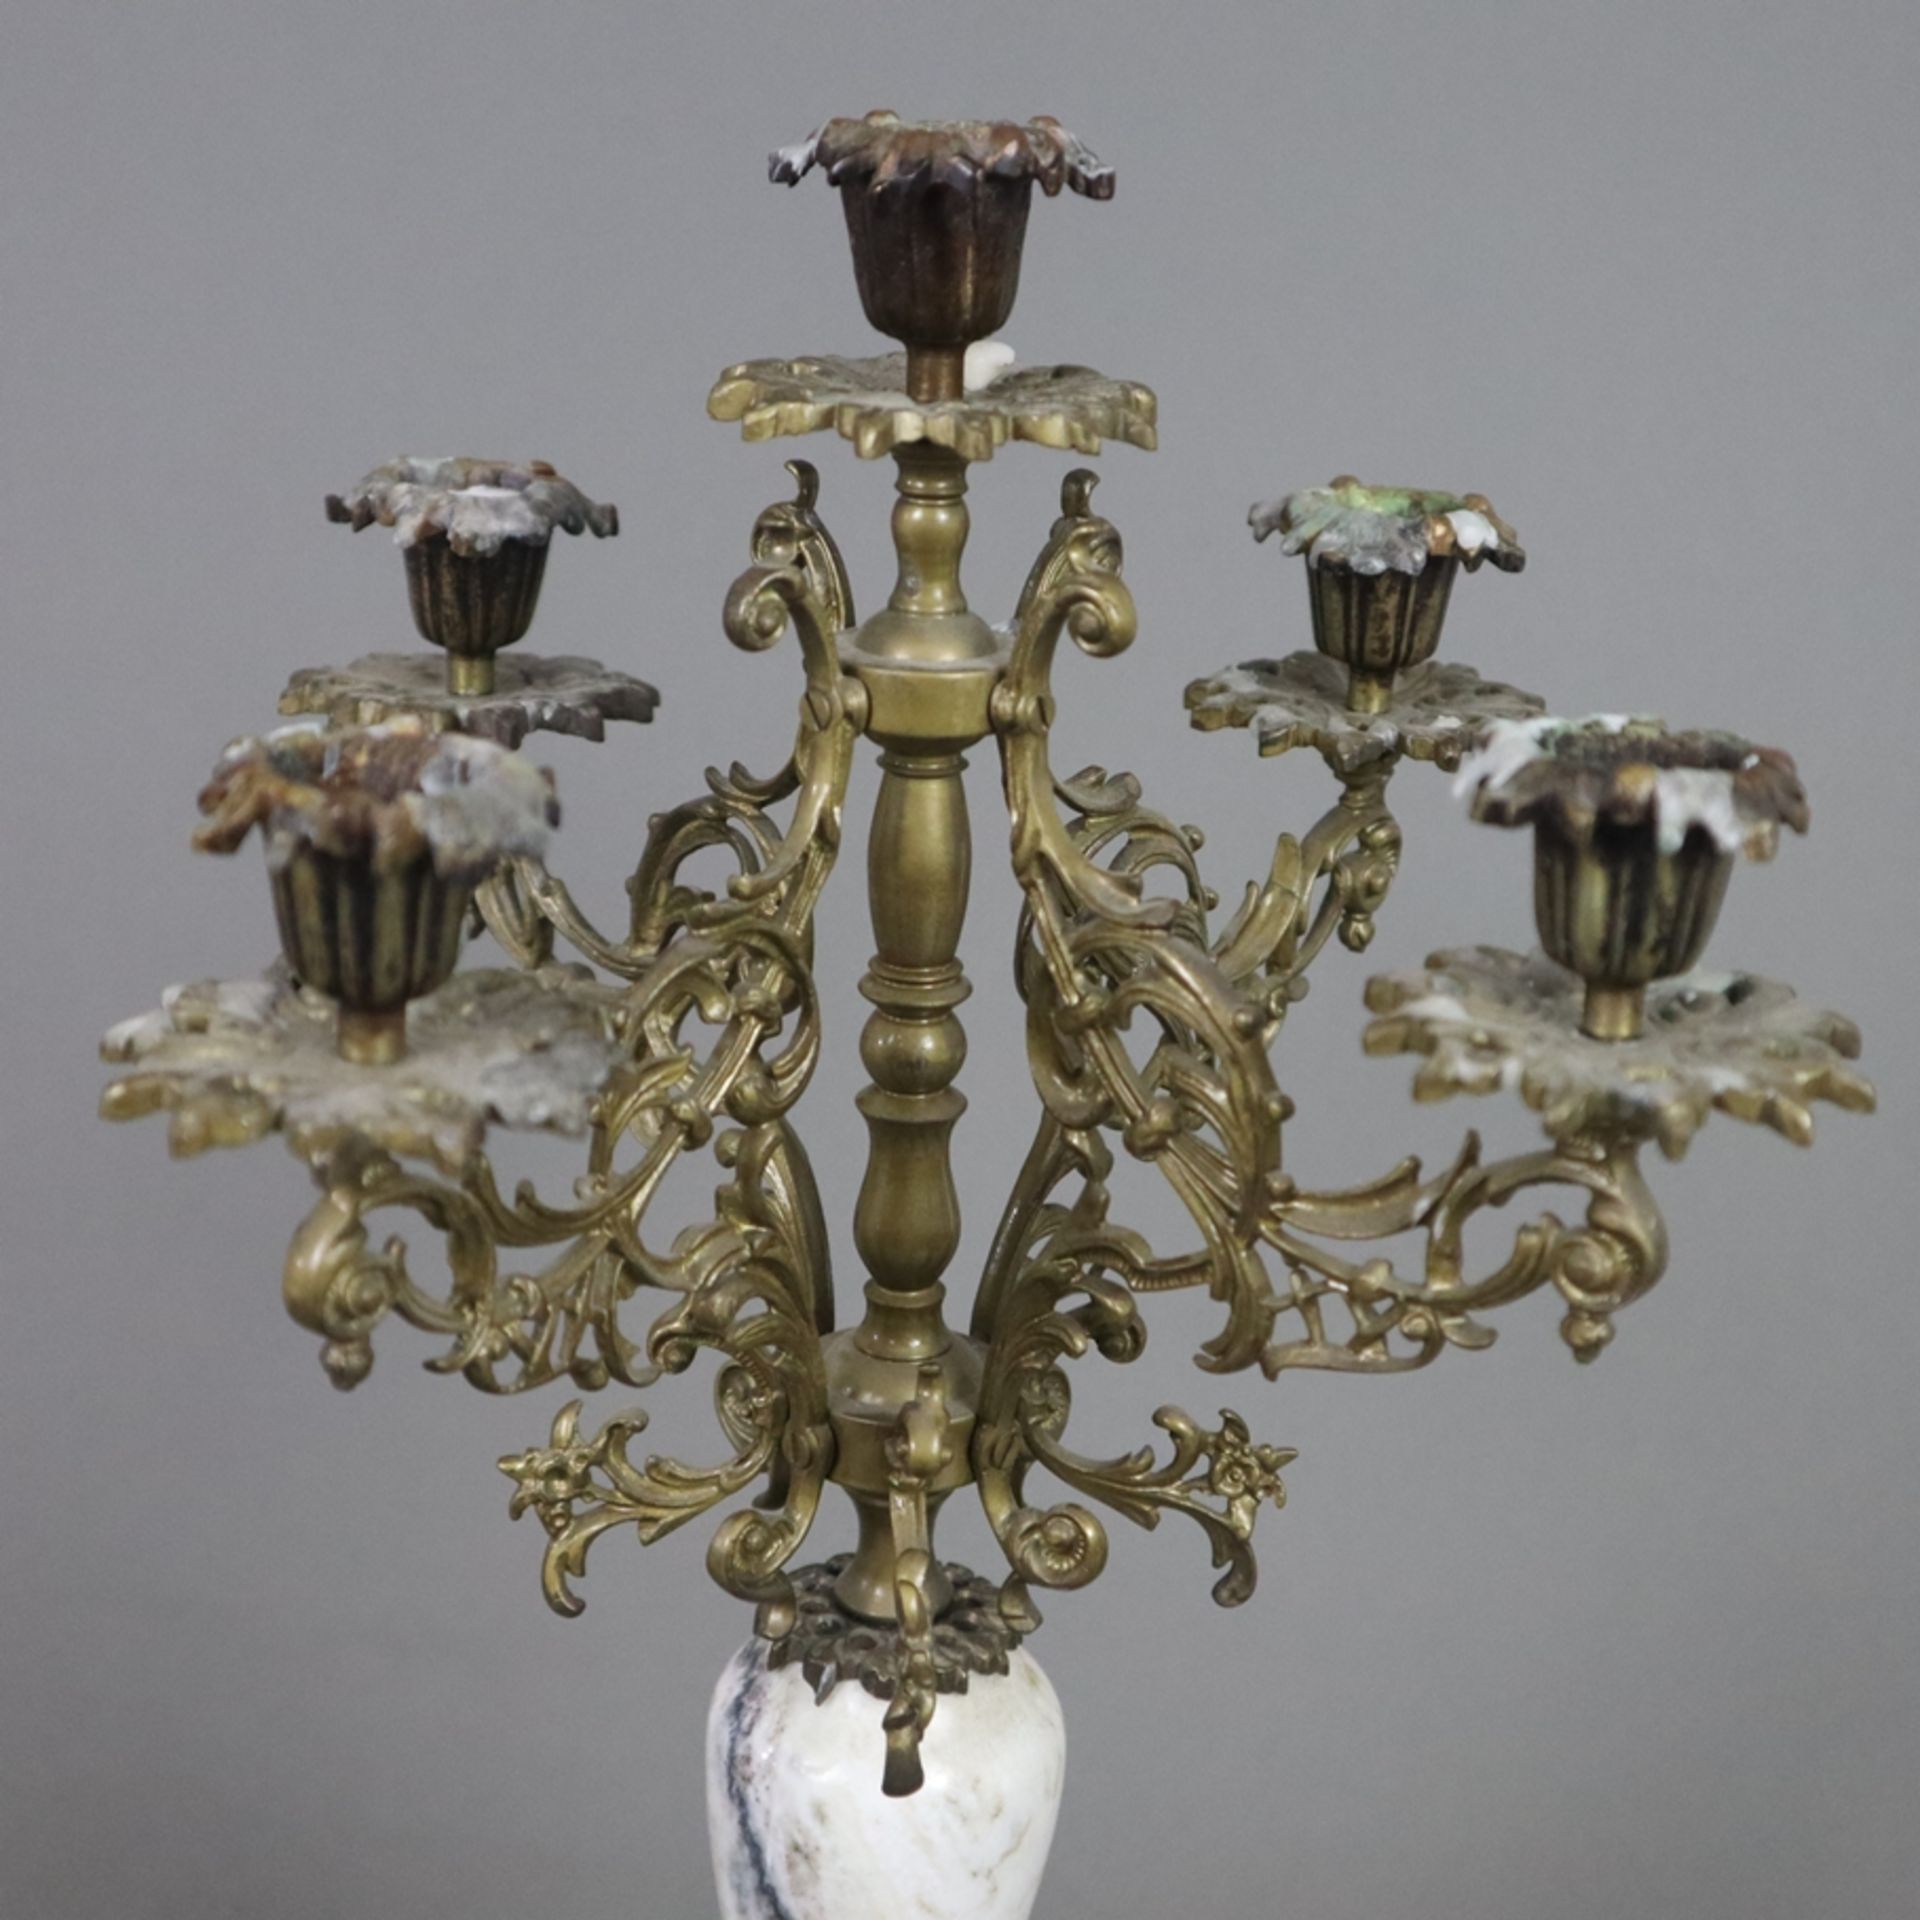 Ein Paar Girandolen - Bronze/ Metall/ geäderter Marmor, vierfüßiger, gestufter Sockel, mittig Marmo - Image 2 of 7